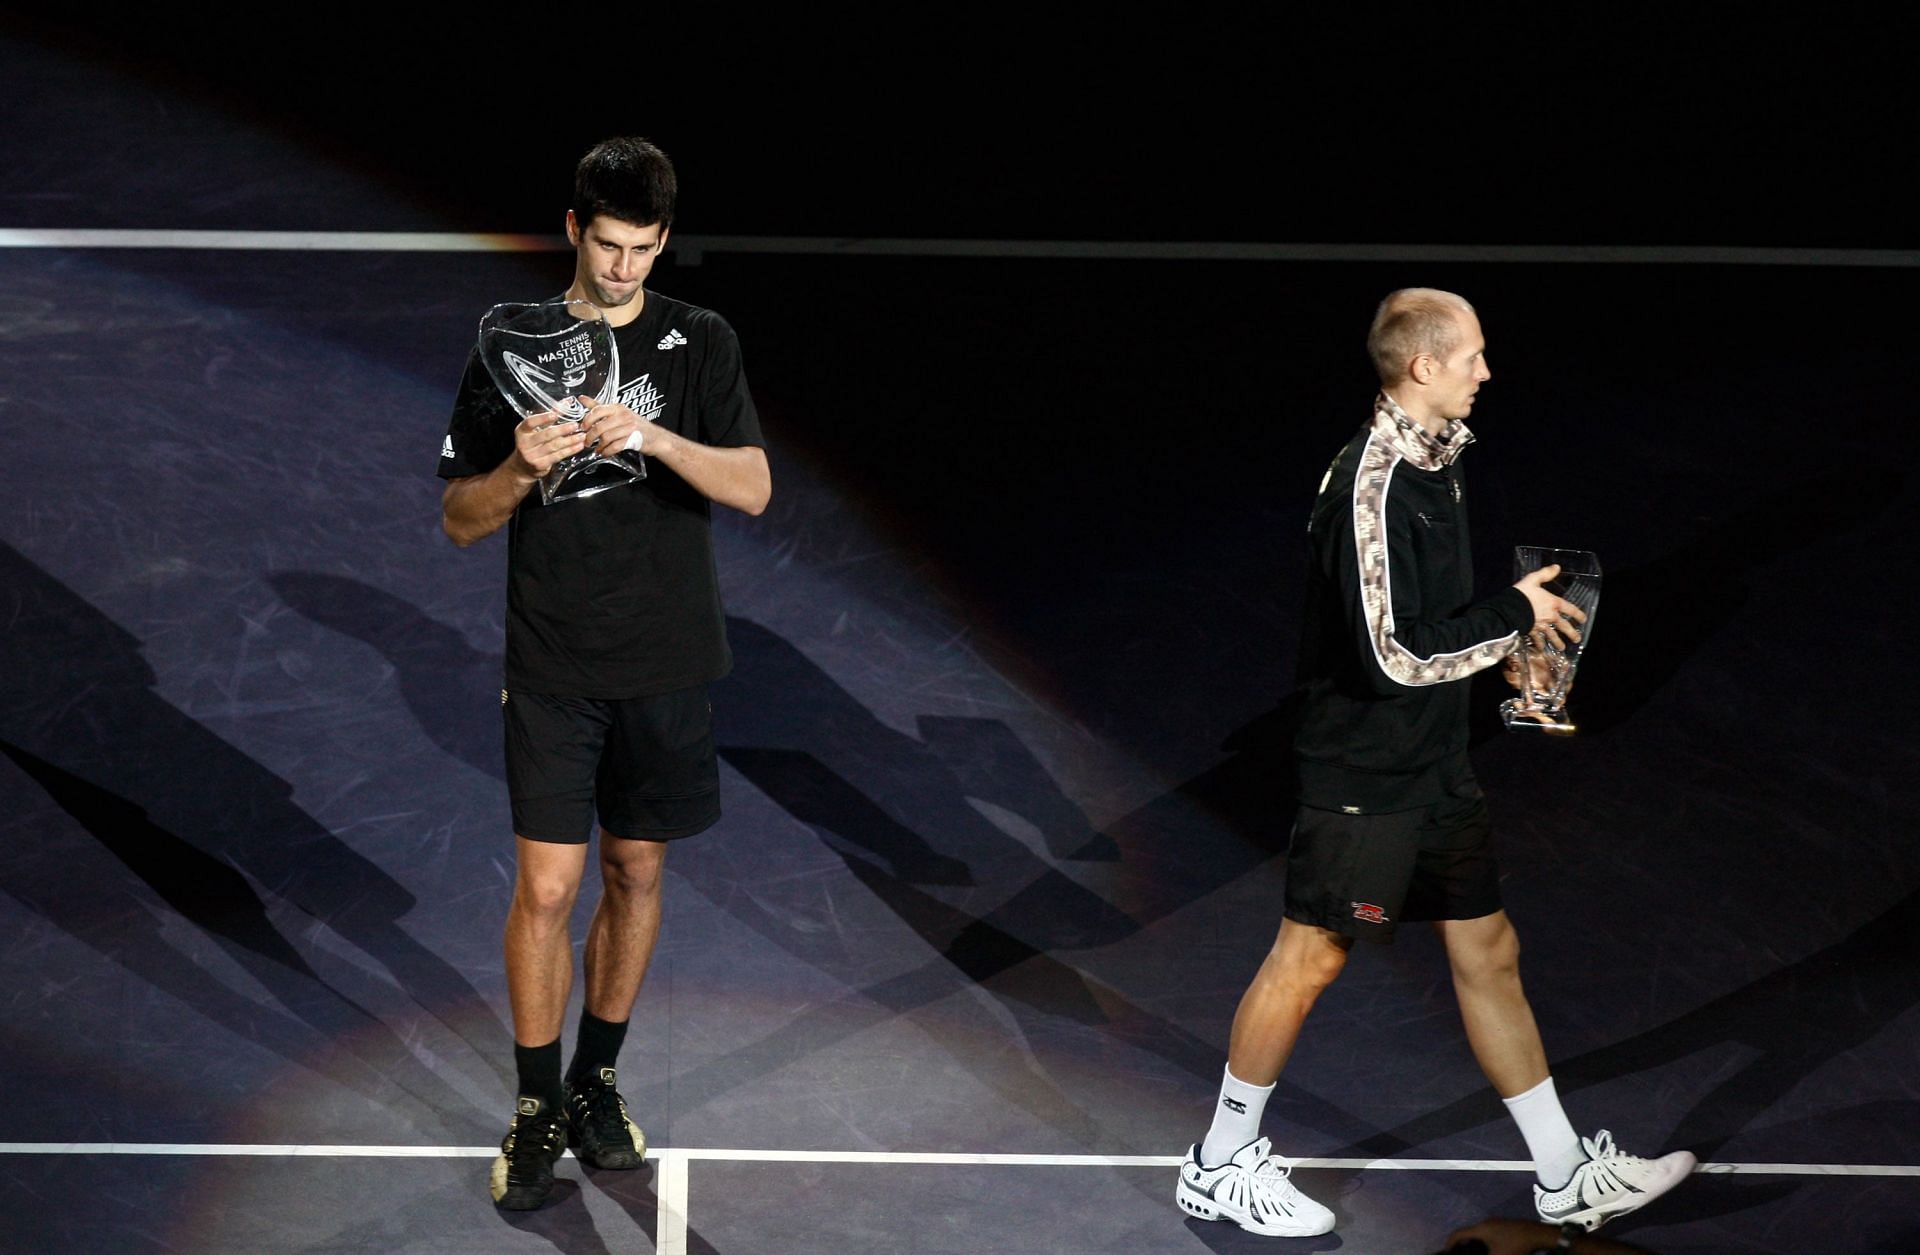 Novak Djokovic [left] after winning the Tennis Masters Cup against Nikolay Davydenko in 2008.